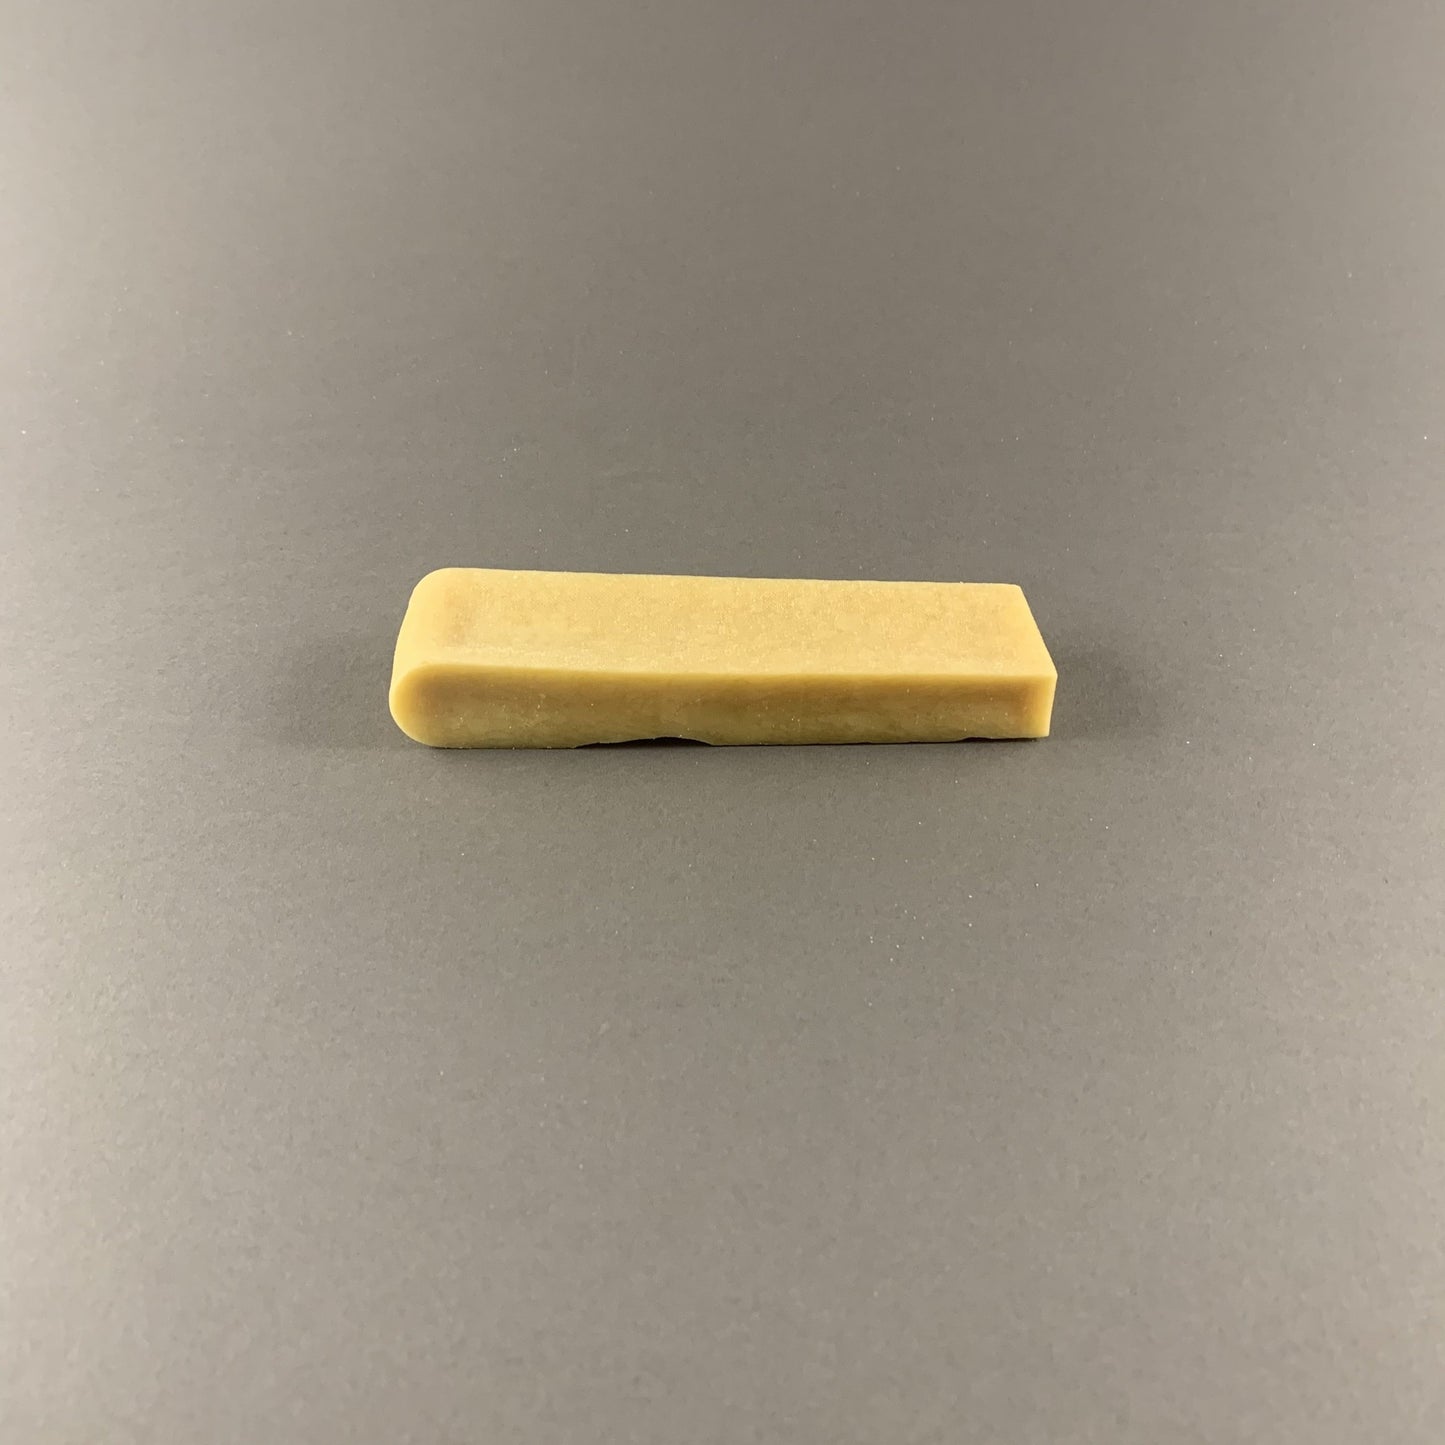 single piece of dog cheese